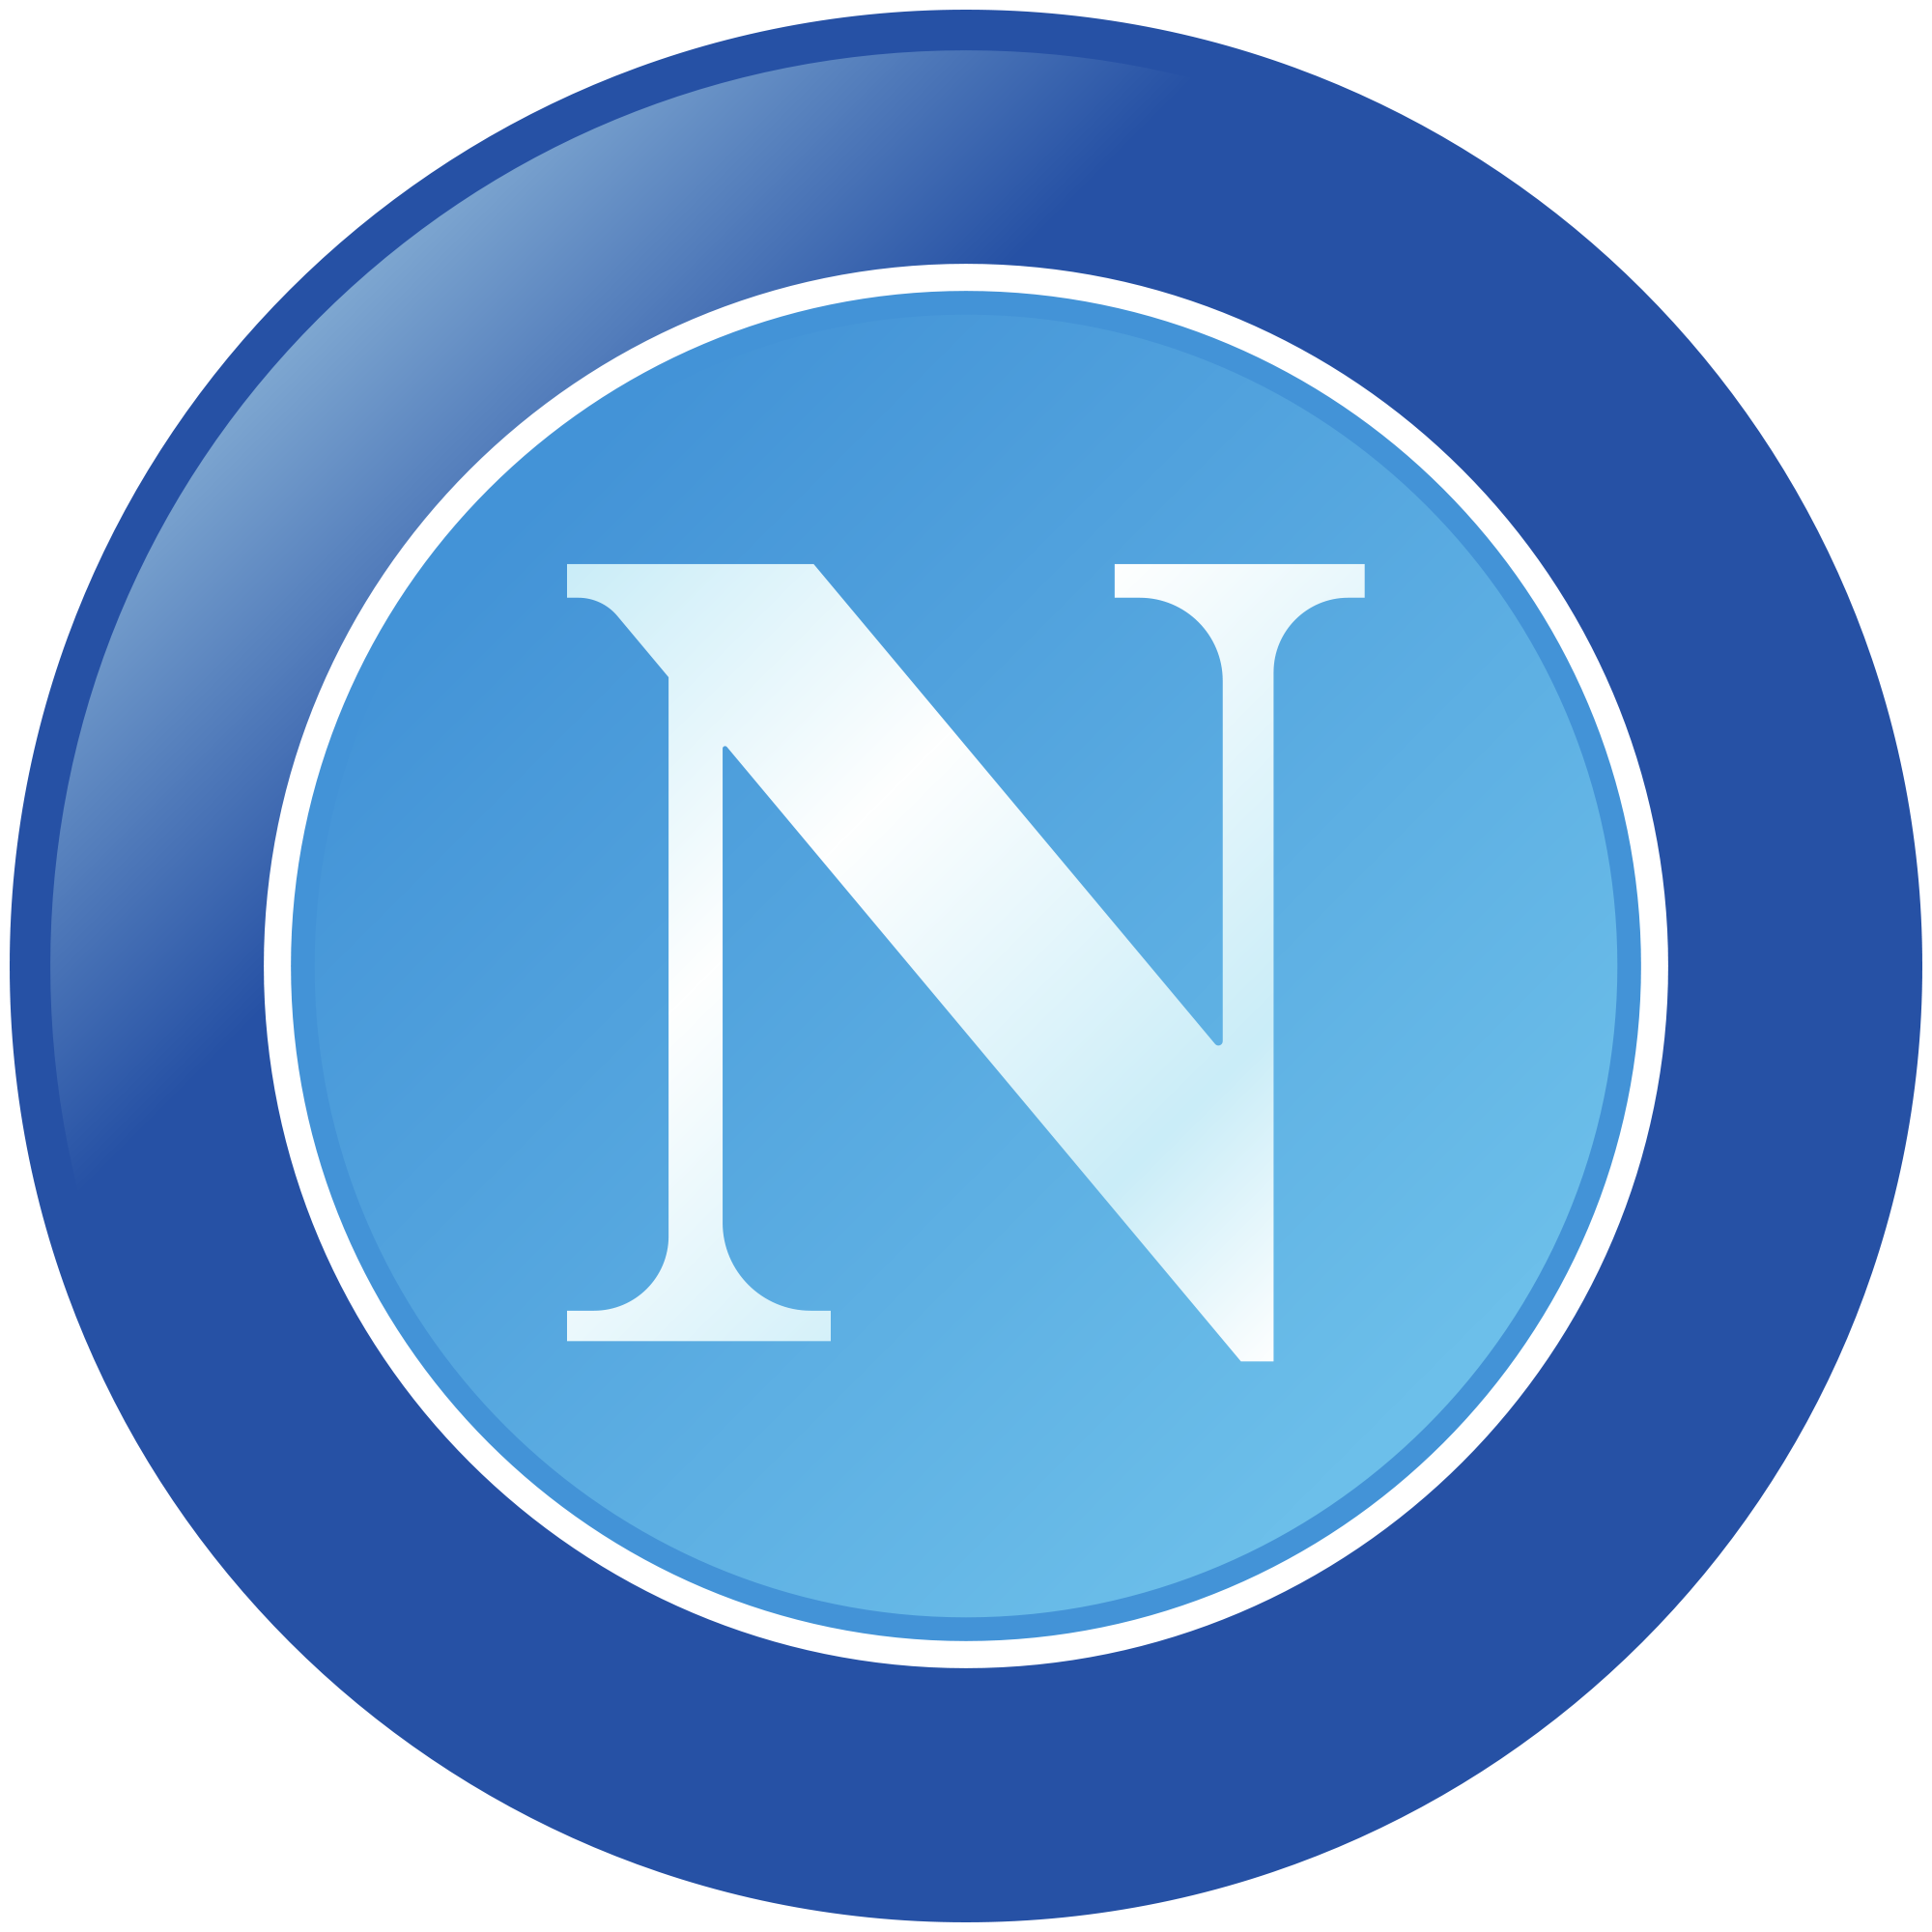 S.S.C. Napoli - Wikipedia, the free encyclopedia